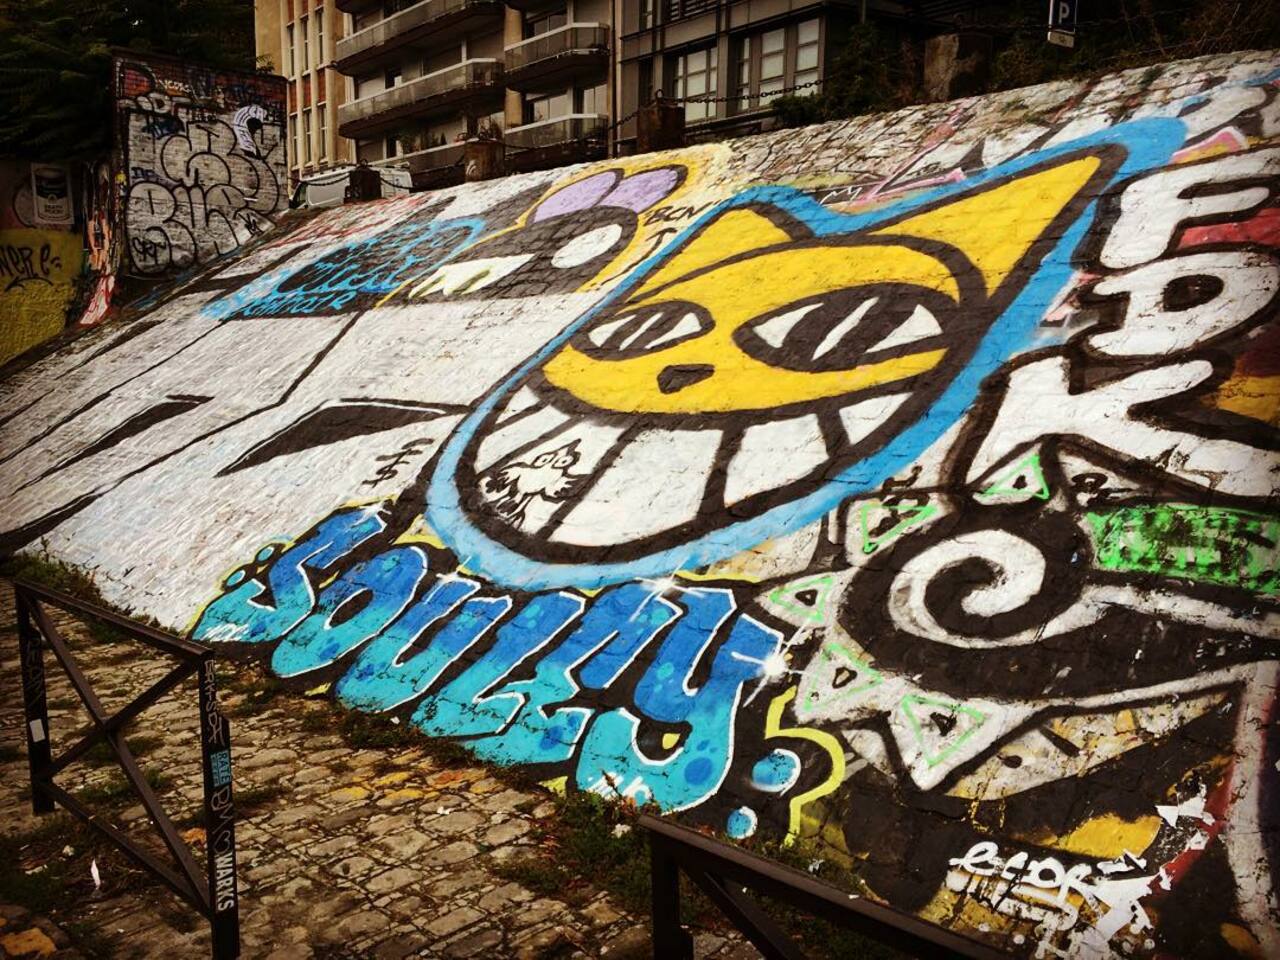 #Paris #graffiti photo by @allaboutparisandbeyond http://ift.tt/1MvqM8u #StreetArt http://t.co/Z2HNODm615